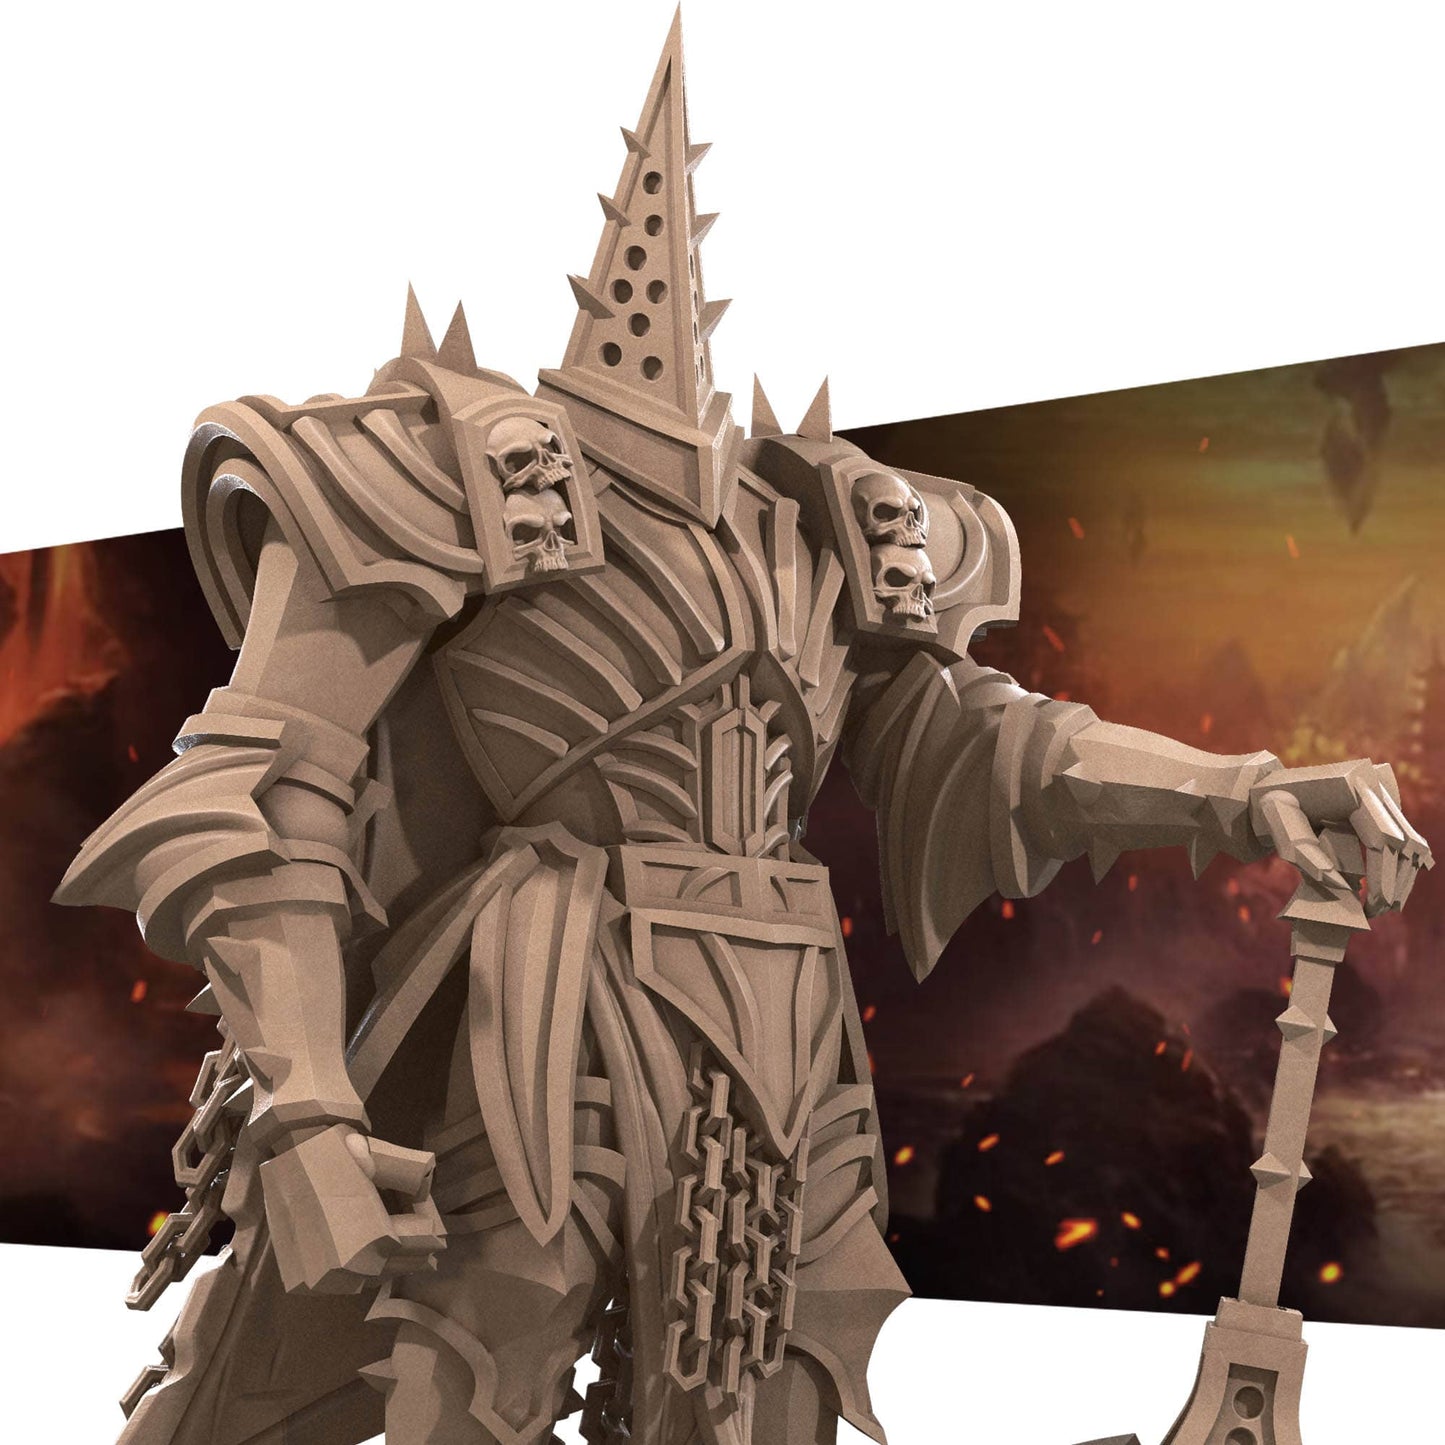 Penitent Knight | D&D Miniature TTRPG Character | Bite the Bullet - Tattles Told 3D